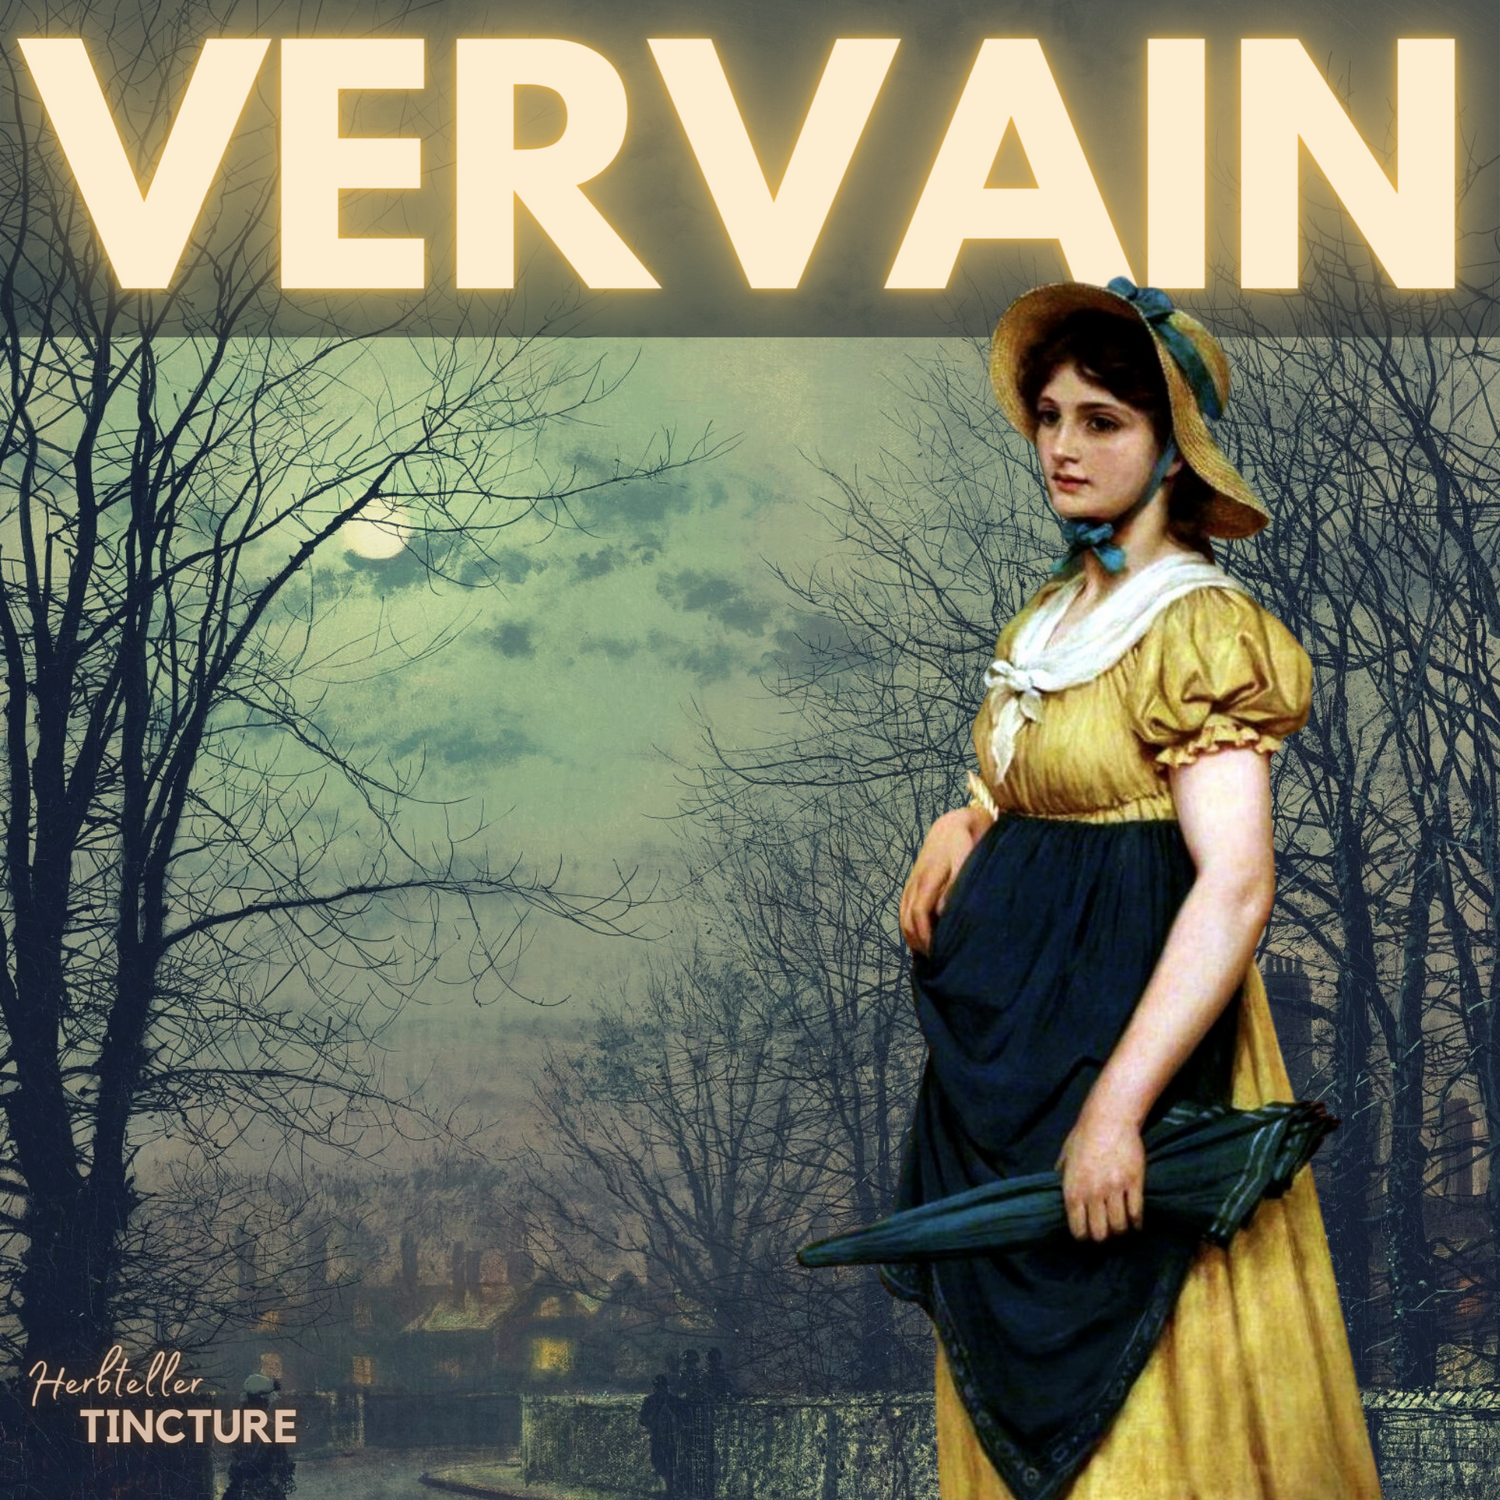 Vervain (Enchanter's Plant) Herbal Tincture - Original City Apothecary